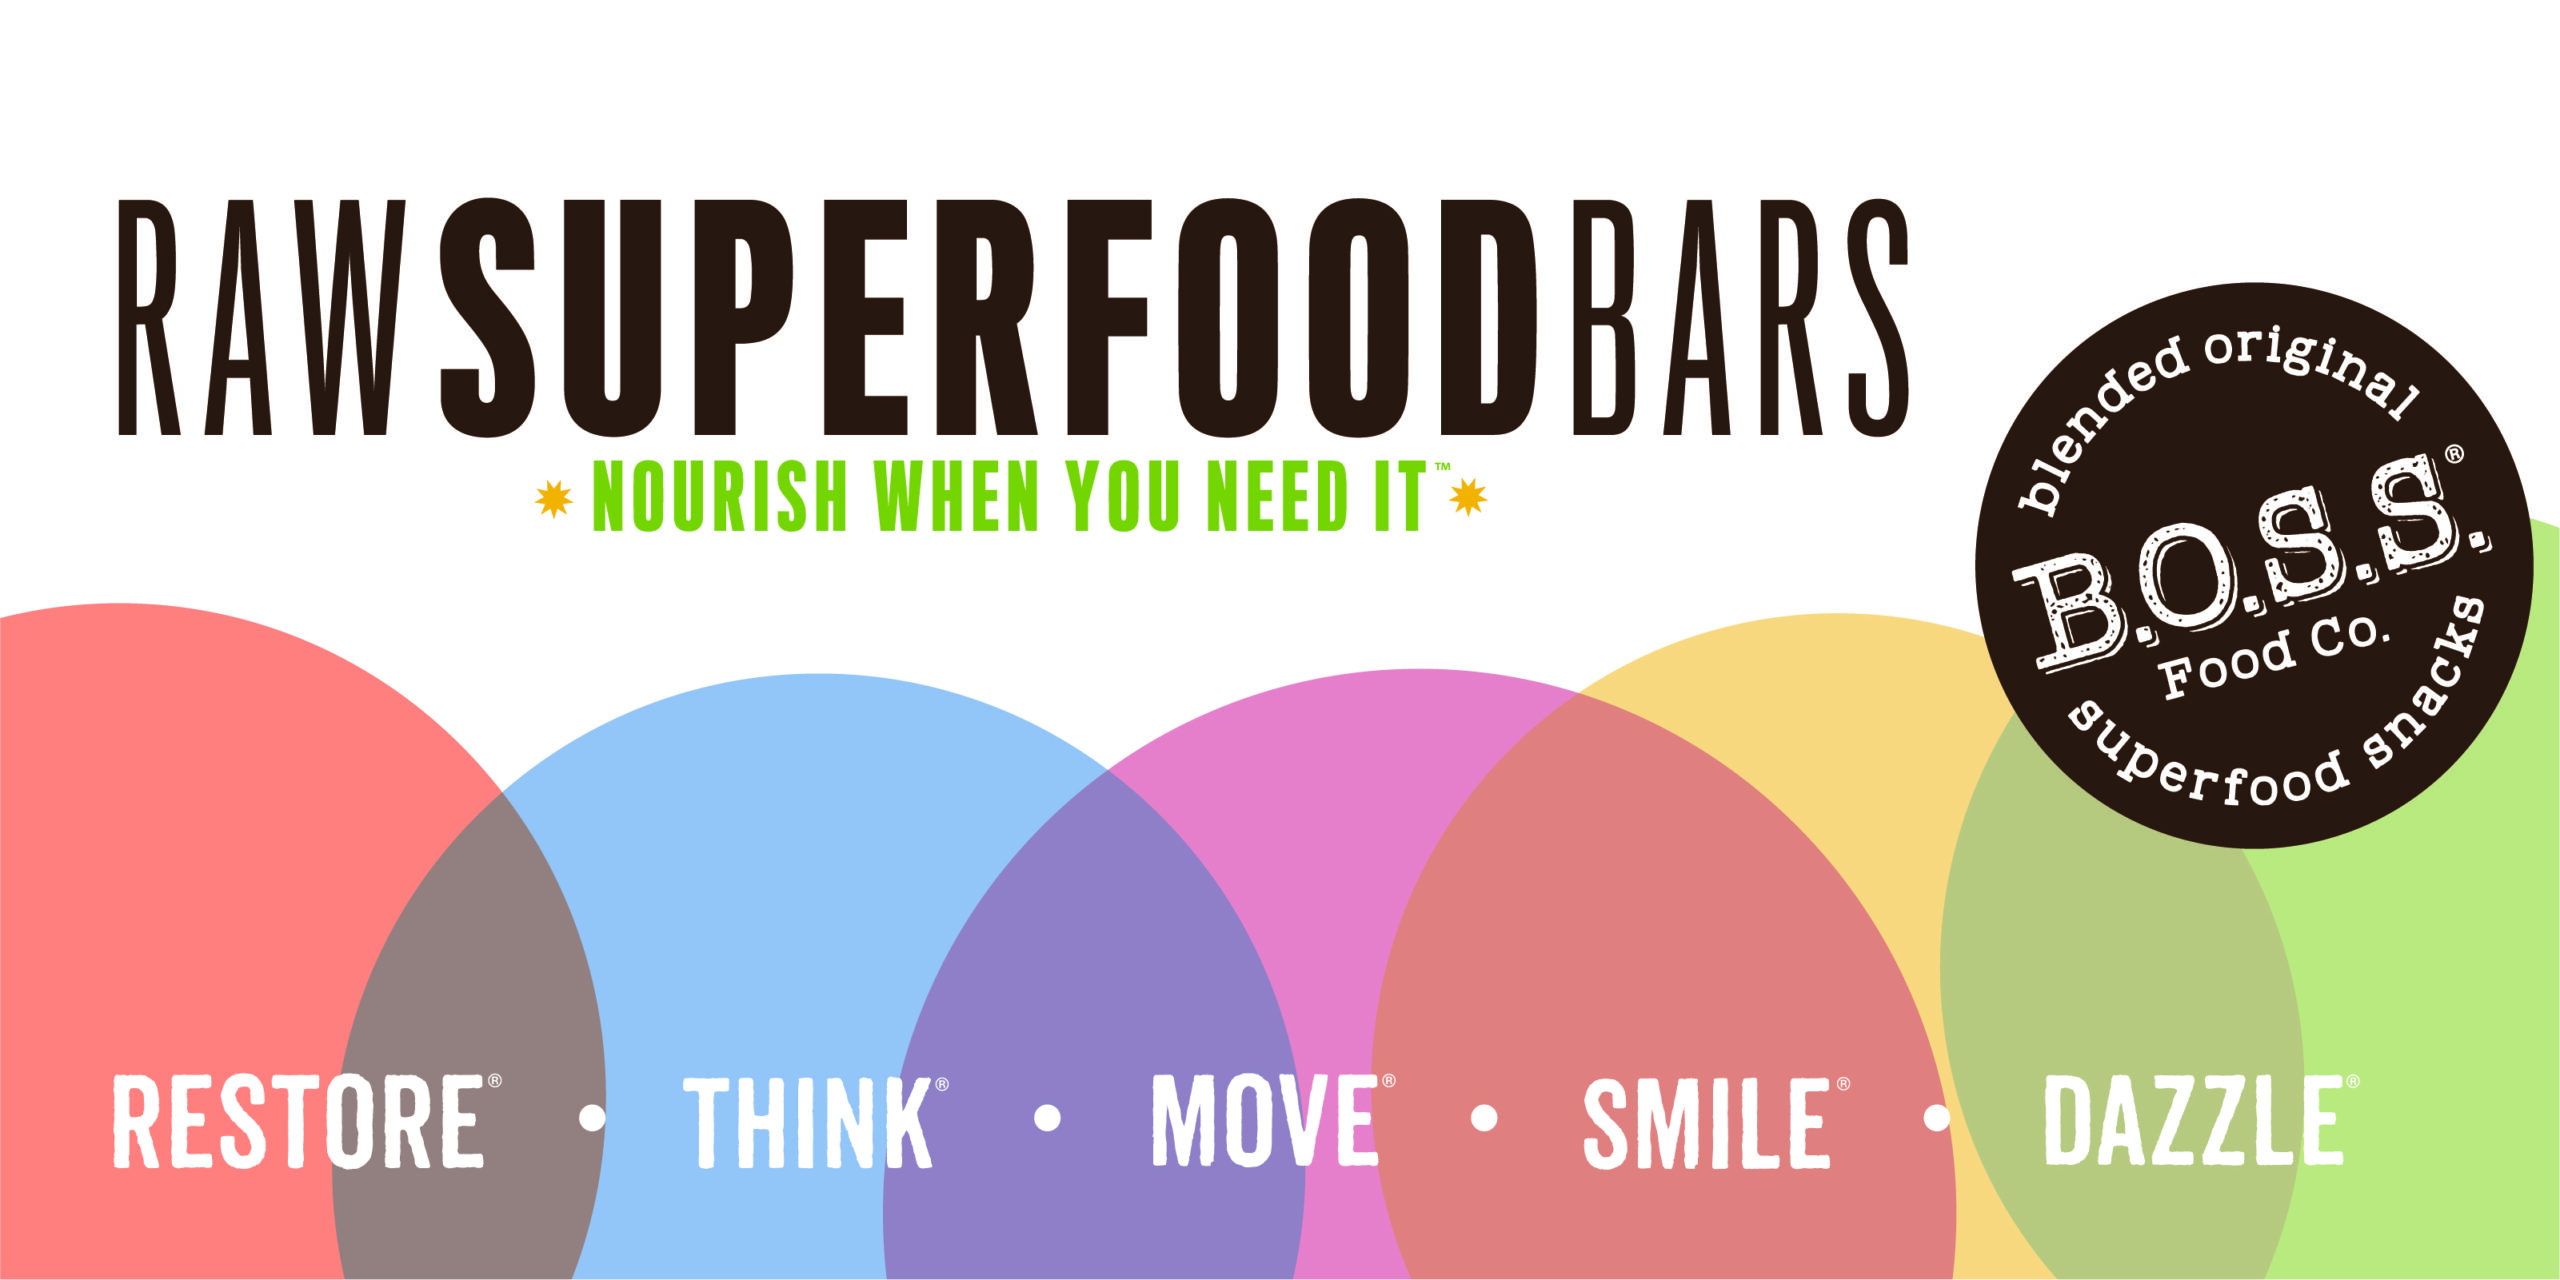 BOSS superfood bars